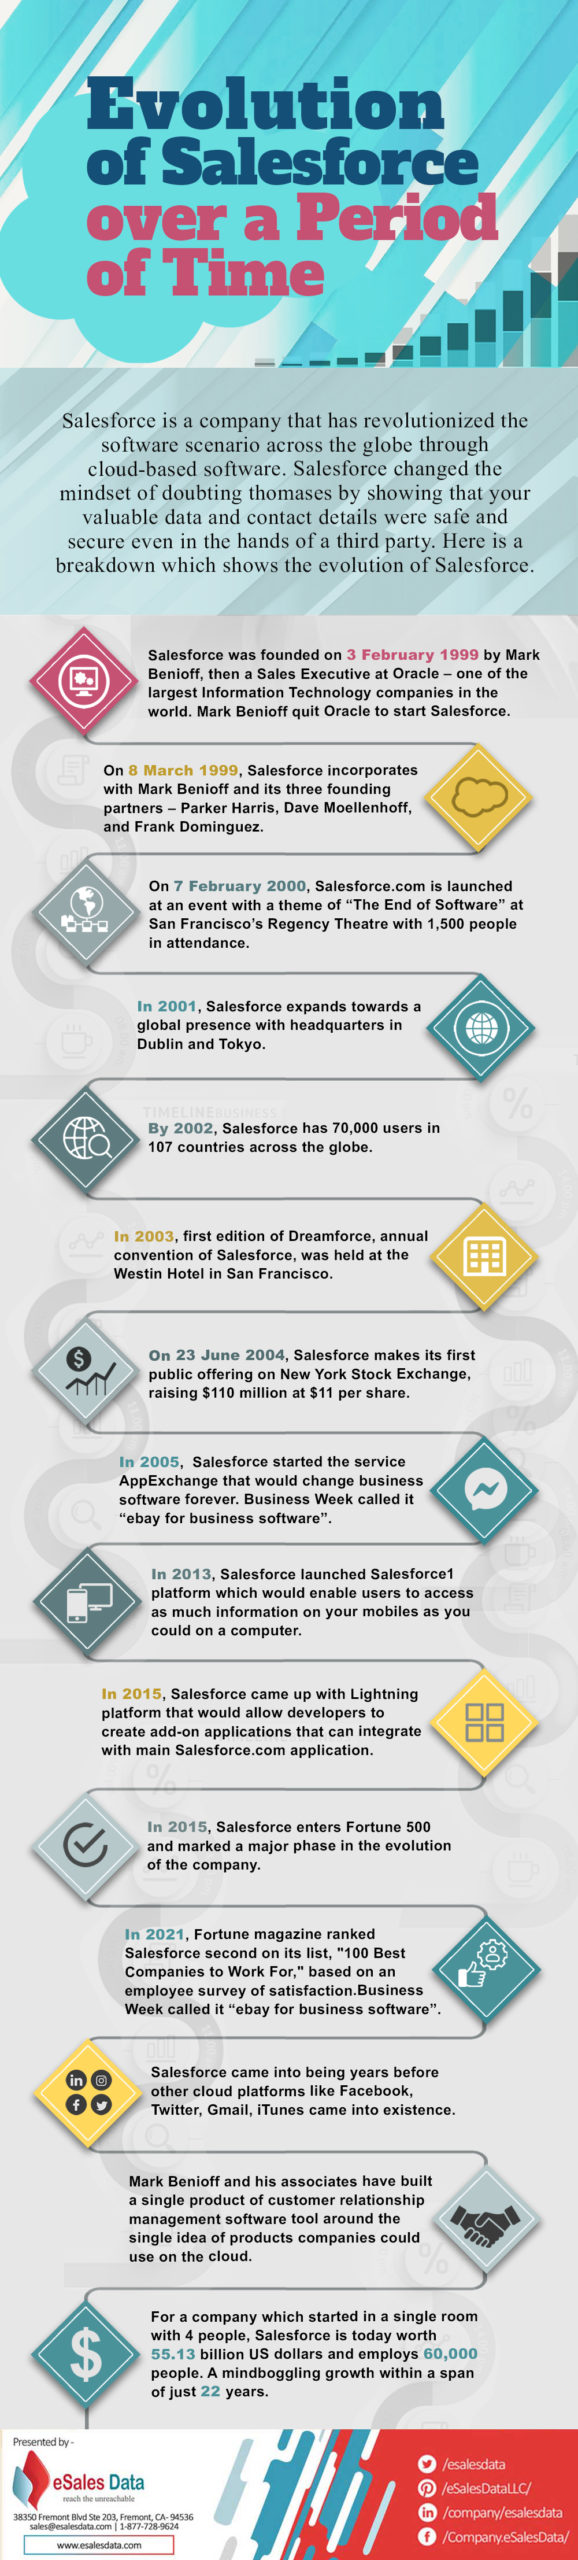 Evolution of salesforce infographic